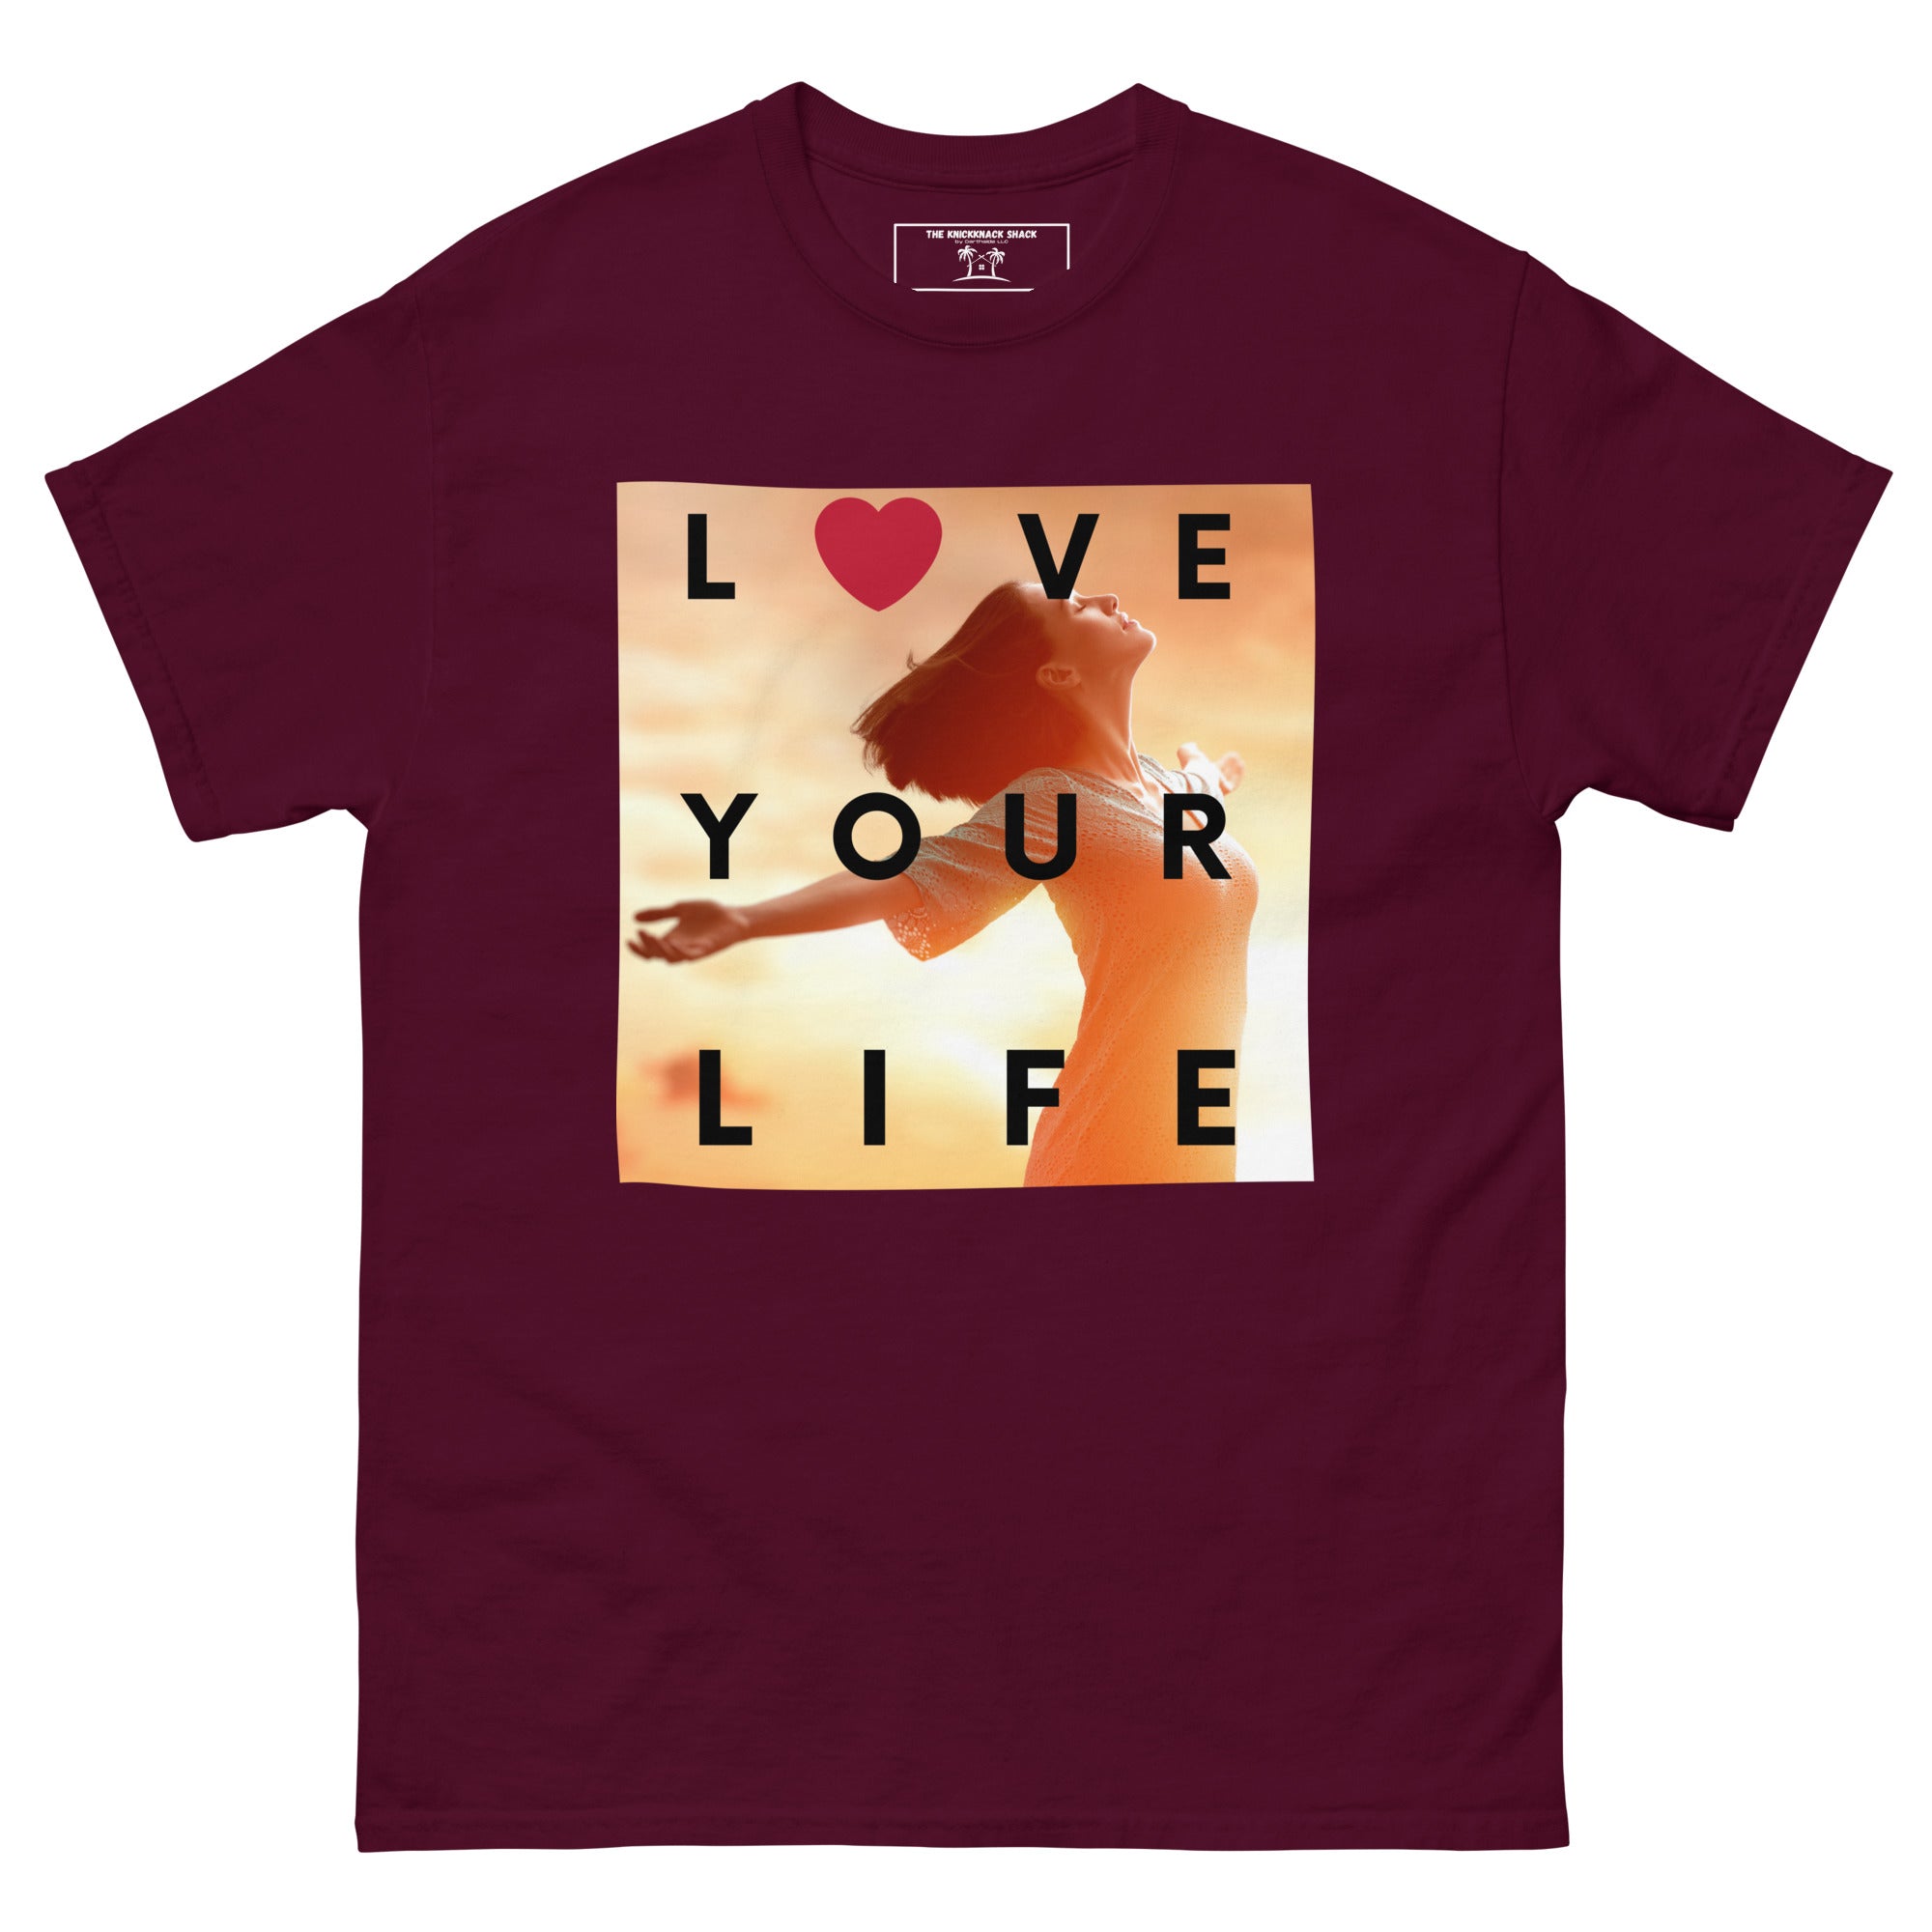 Tee-shirt classique - Love Your Life (couleurs sombres)